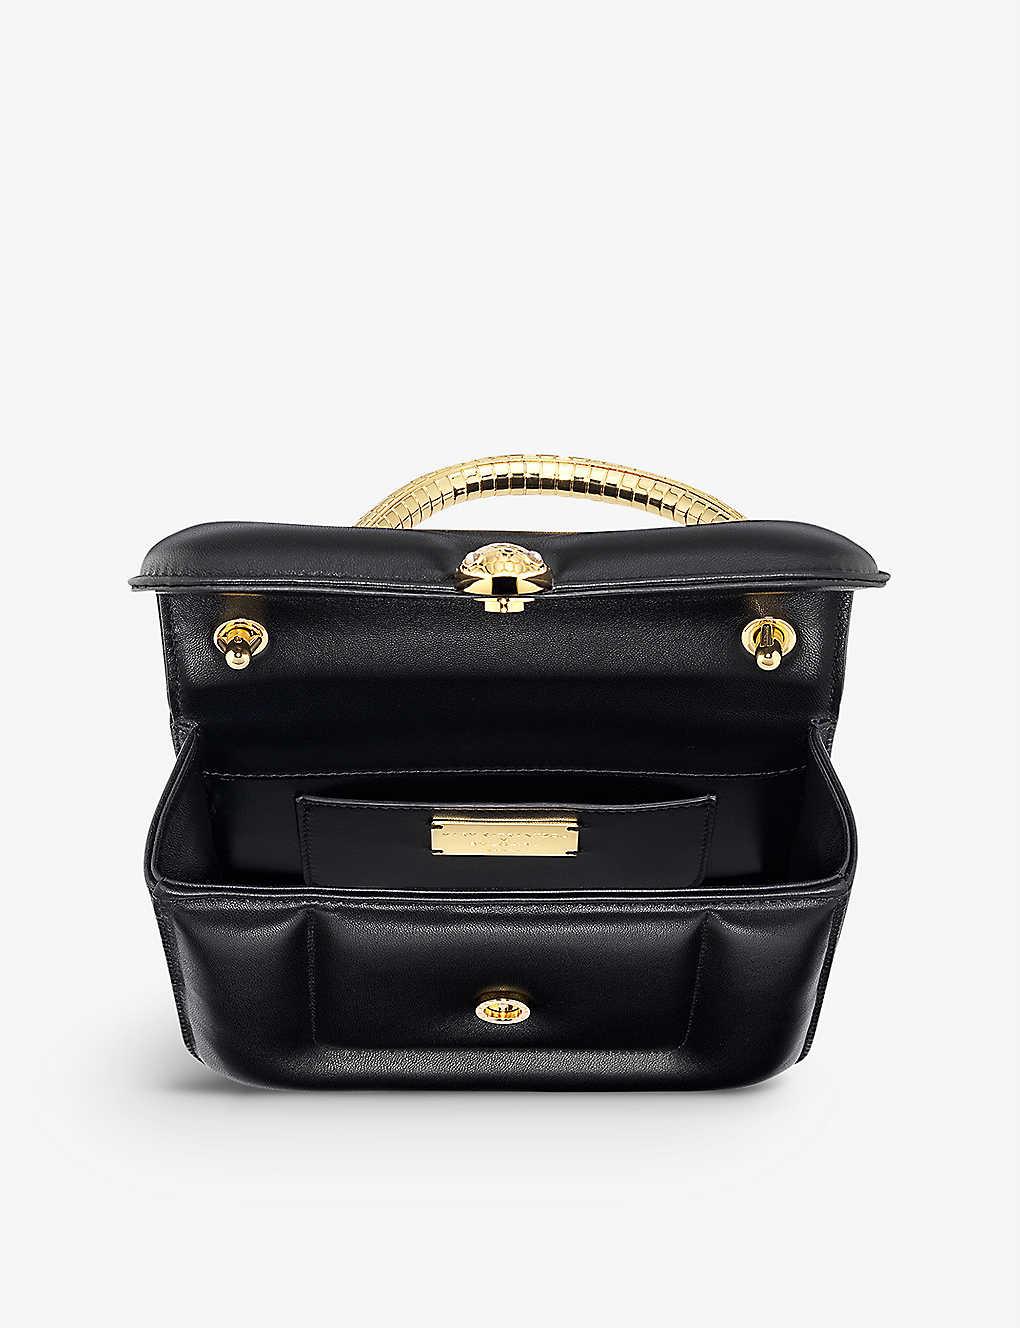 BVLGARI X Mary Katrantzou Leather Top-handle Bag in Black | Lyst